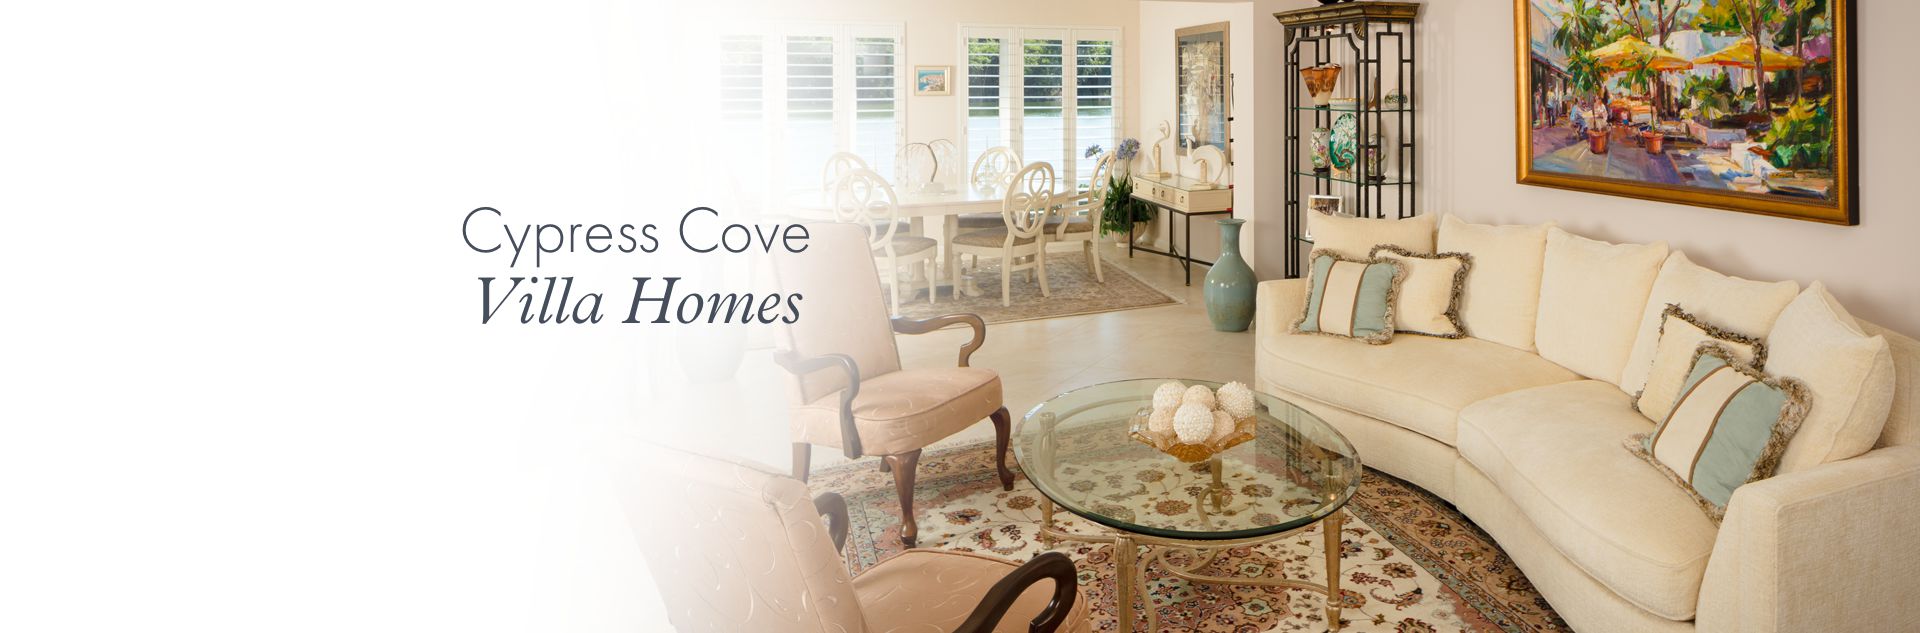 Cypress Cove Villas Homes